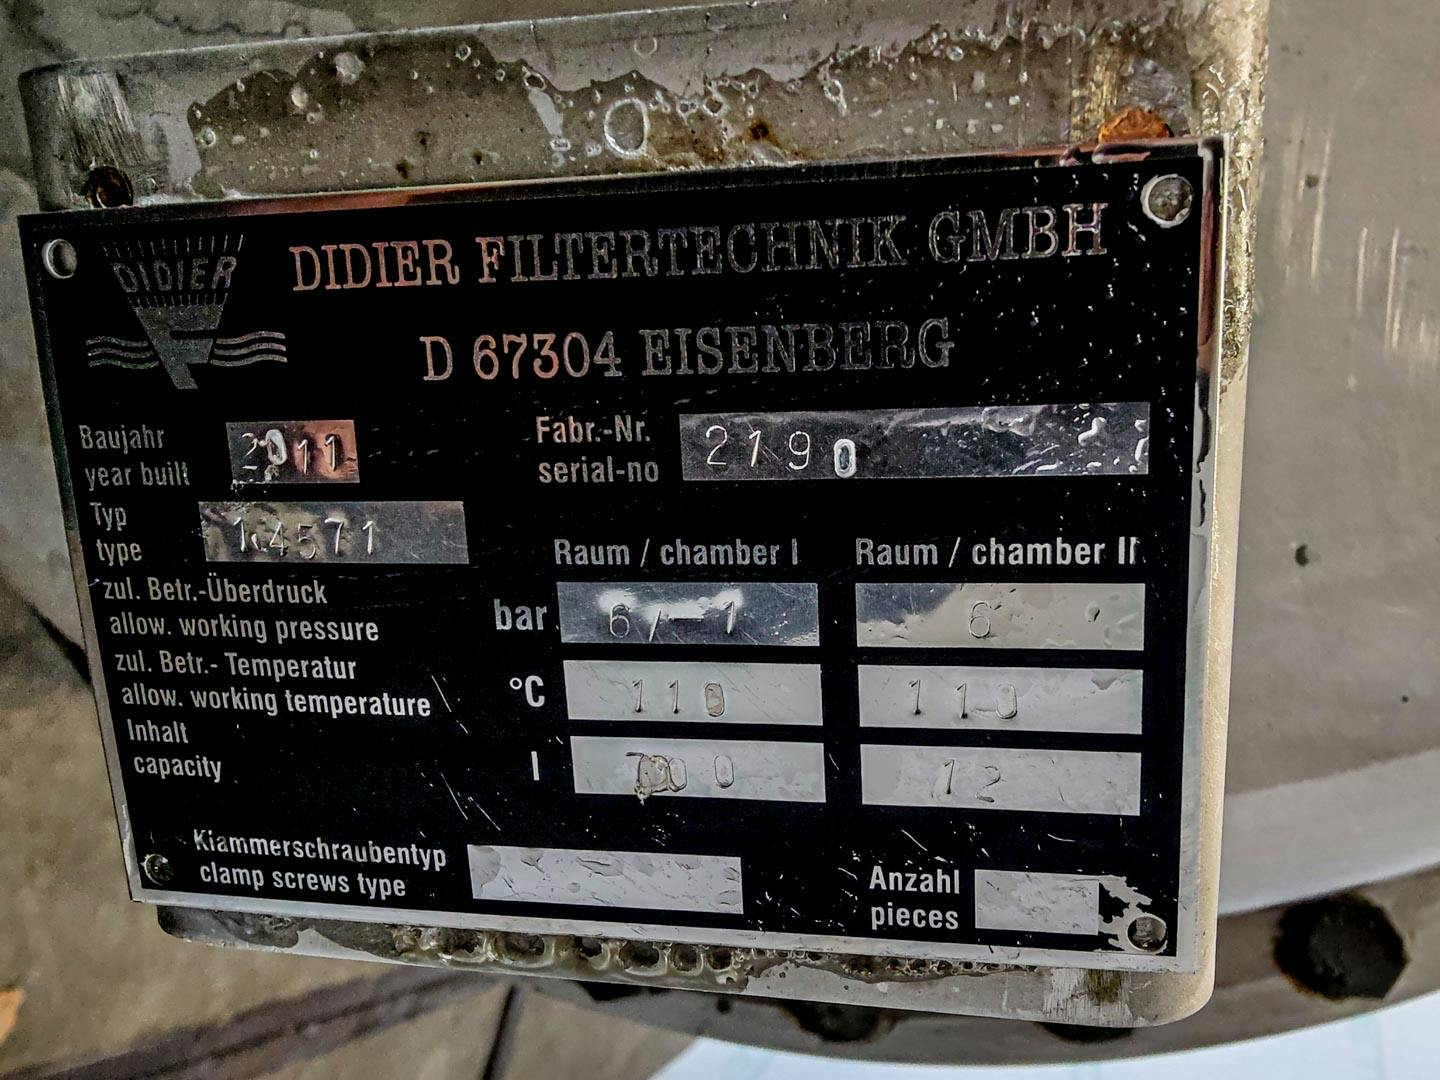 Didier Filtertechnik 550 Ltr. - Stainless Steel Reactor - image 7